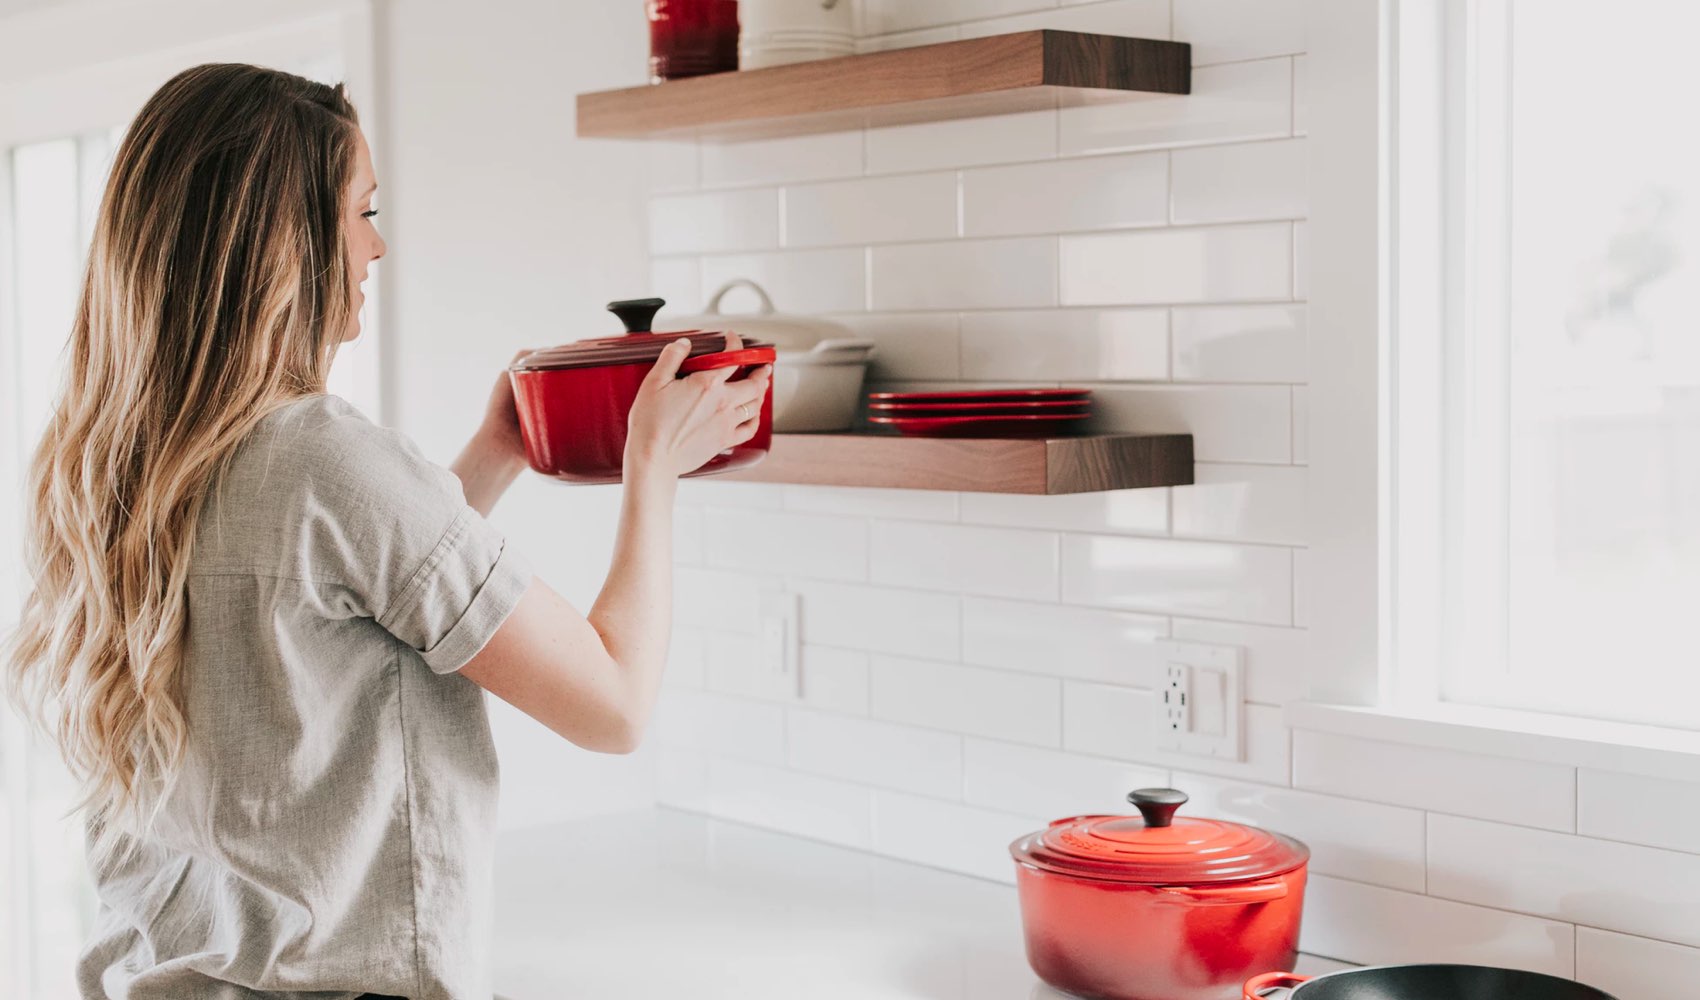 A woman handling kitchenware